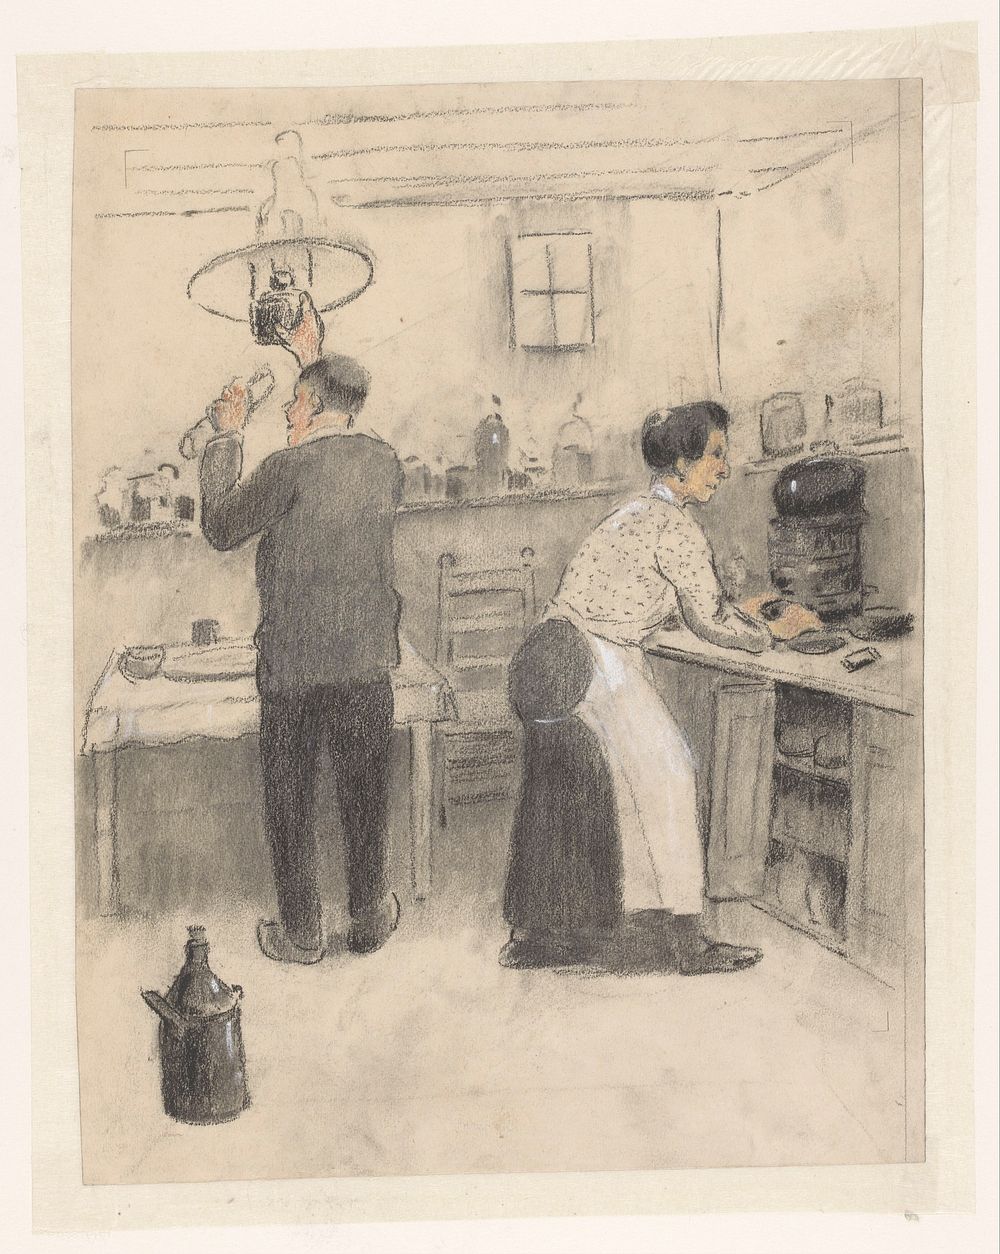 Man en vrouw in de keuken (1900 - 1925) by Herman Heijenbrock